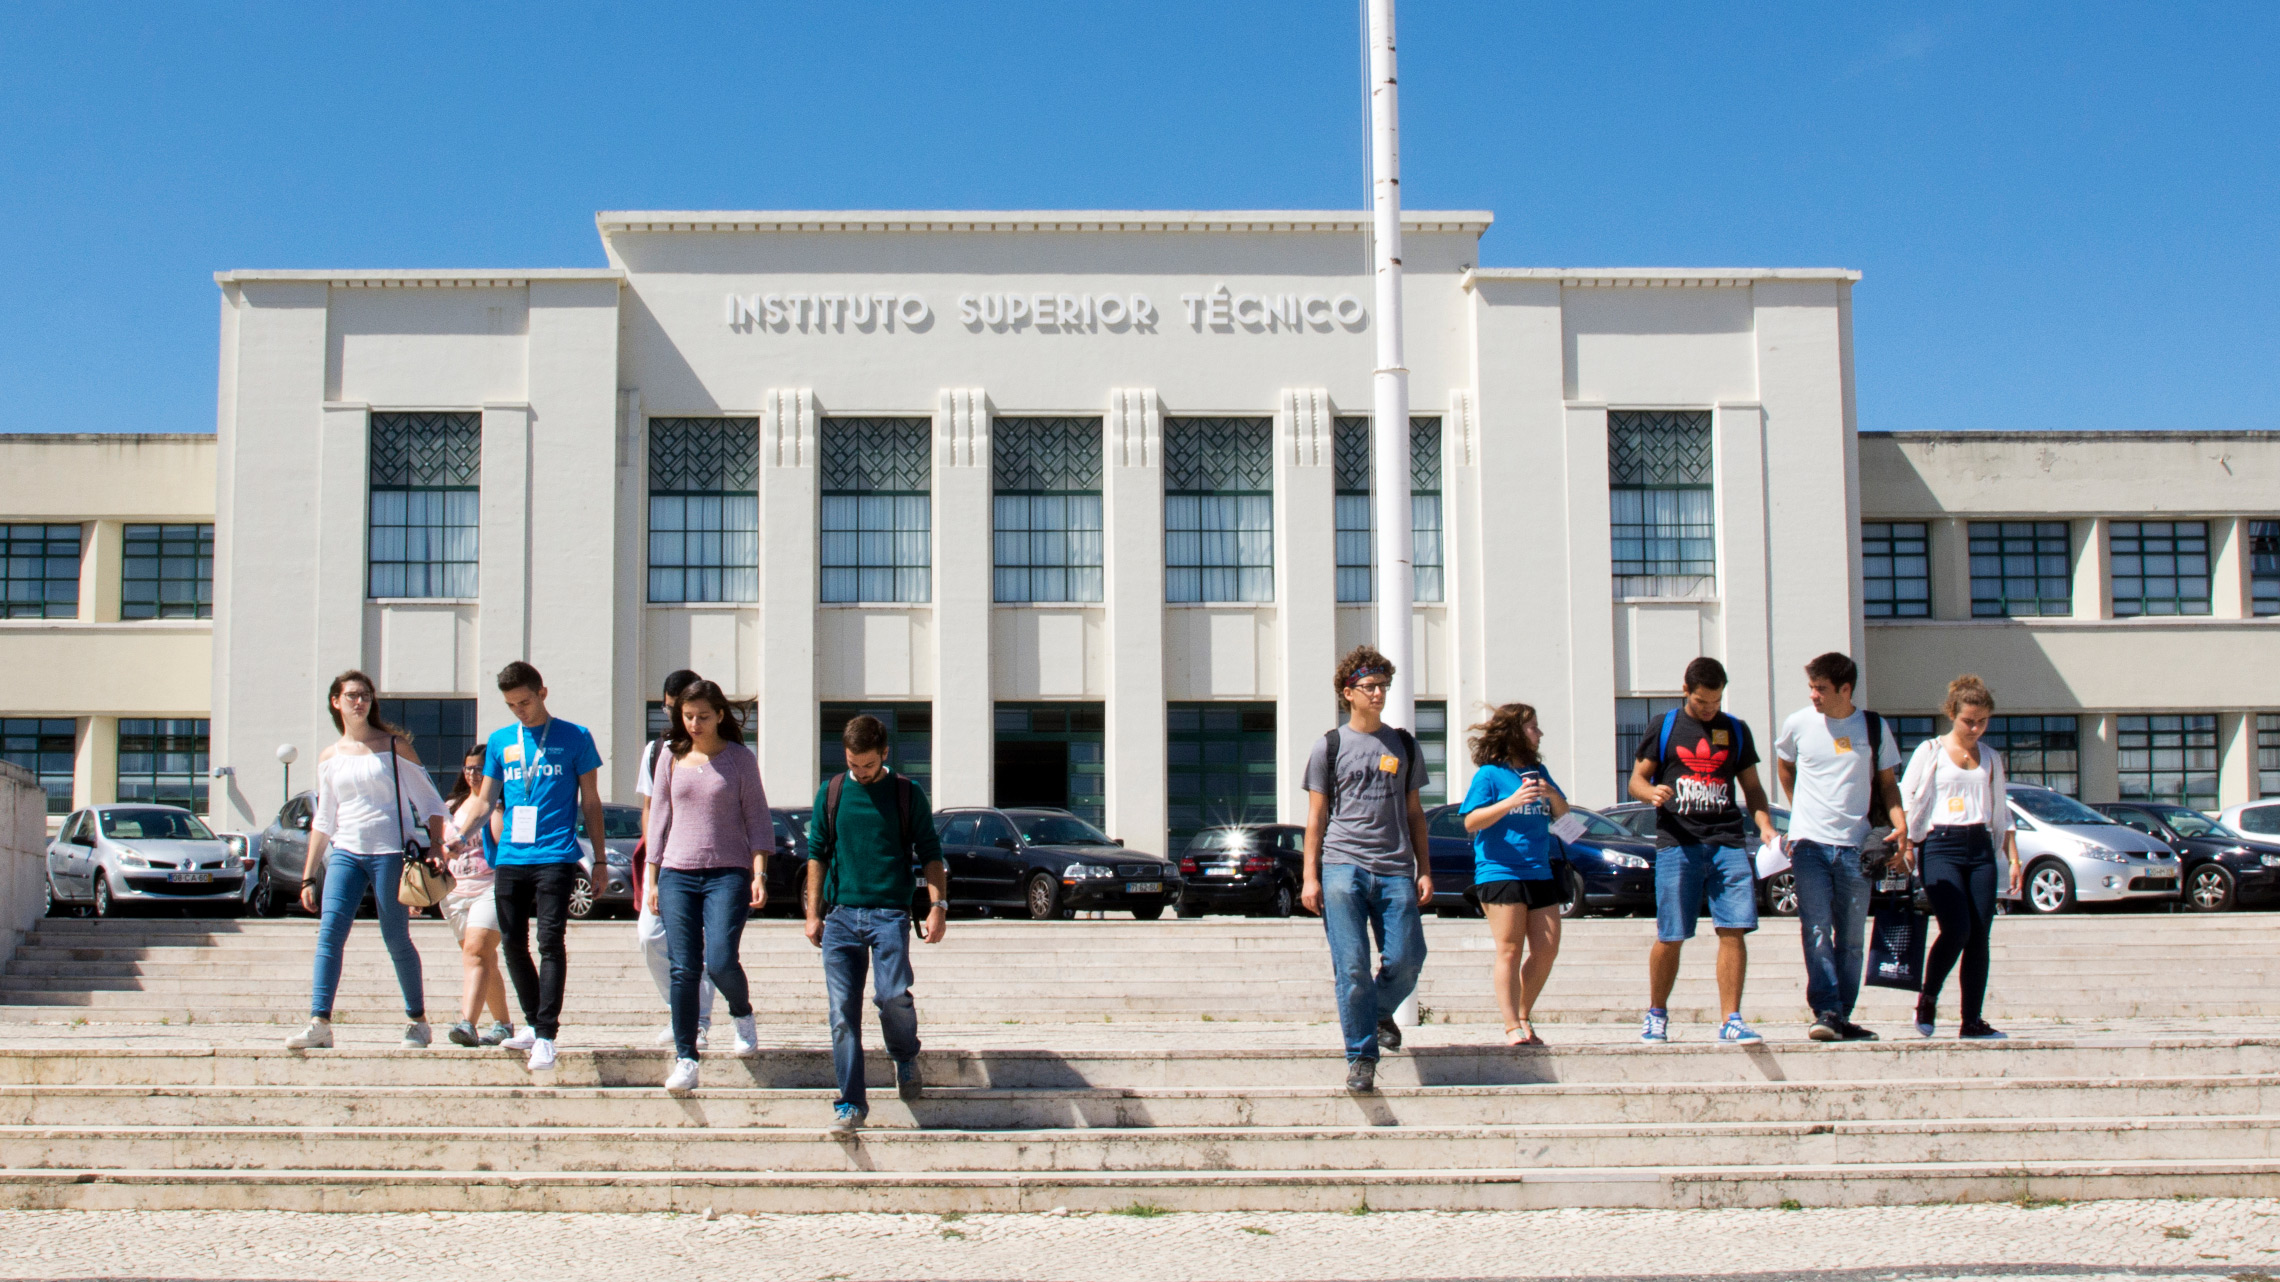 Técnico is among the European Top 20 engineering schools – Técnico Lisboa